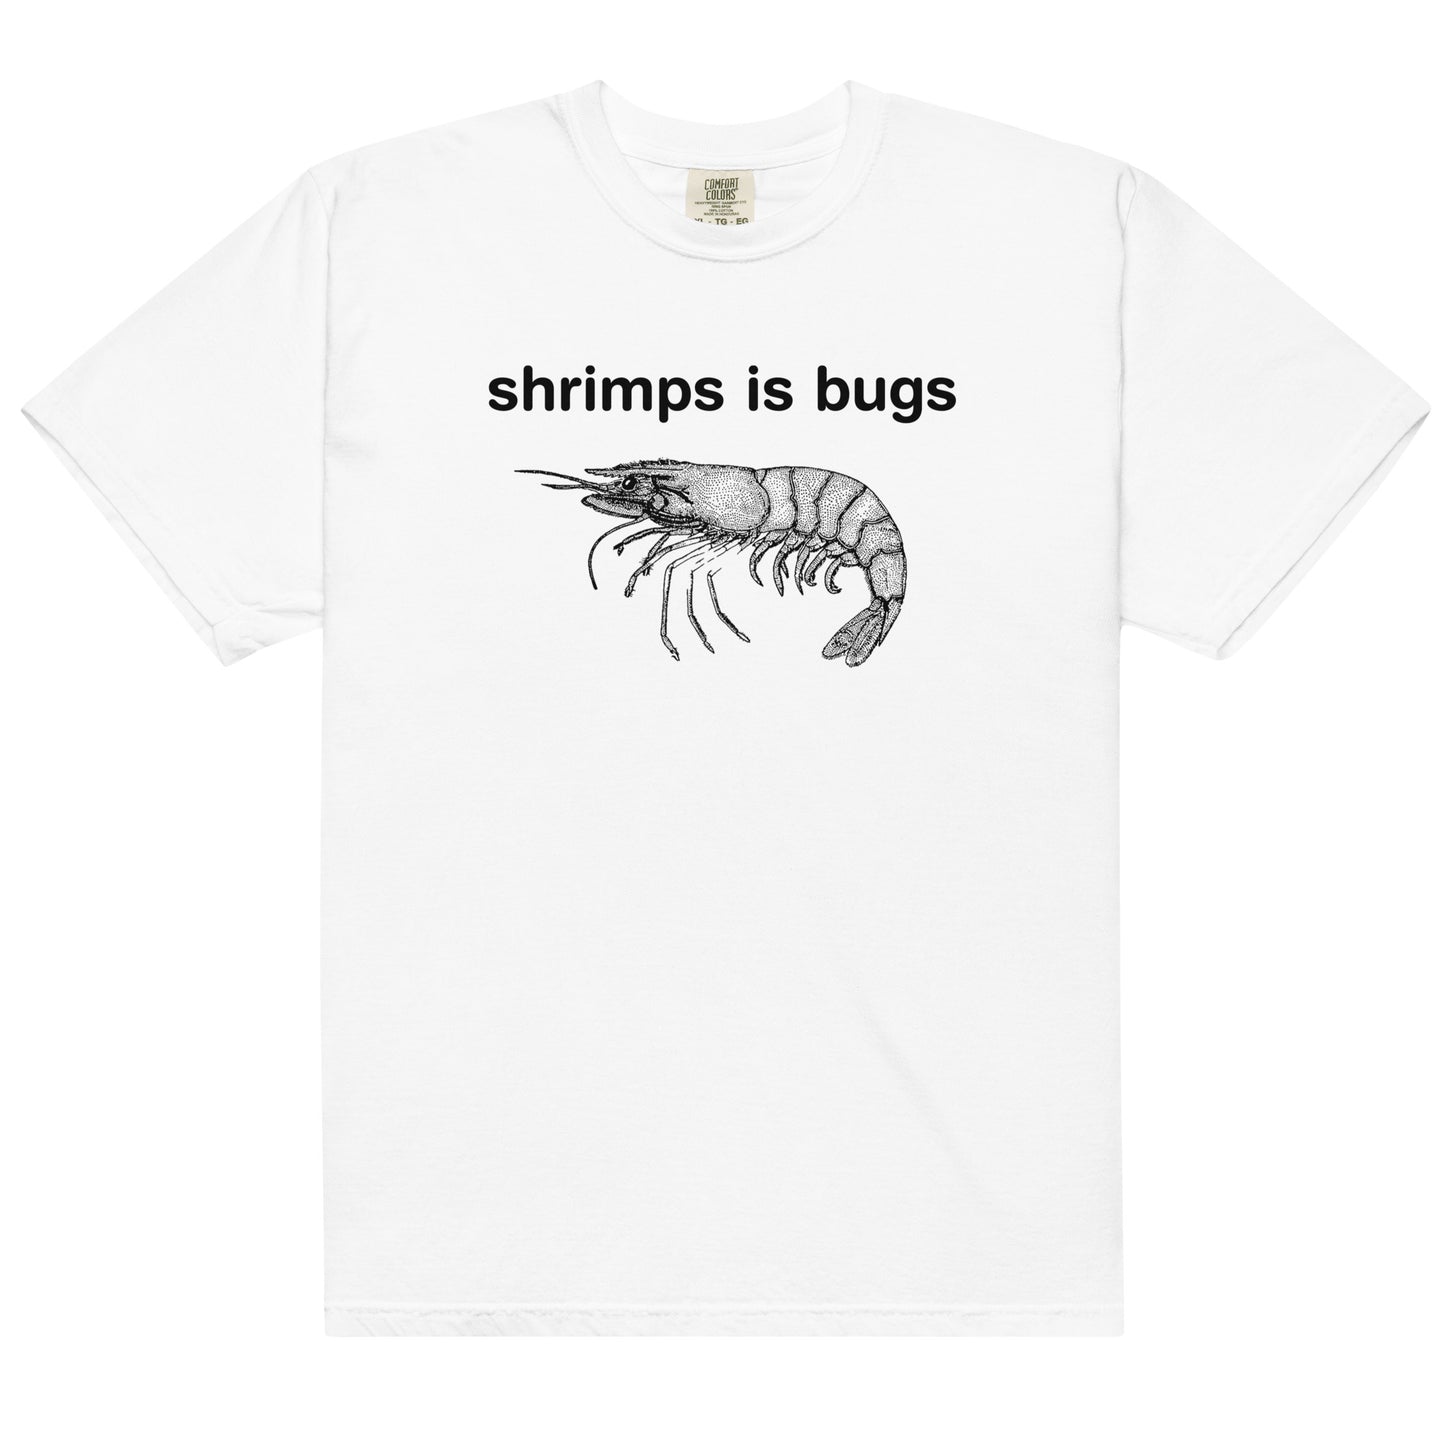 Shrimps Is Bugs.